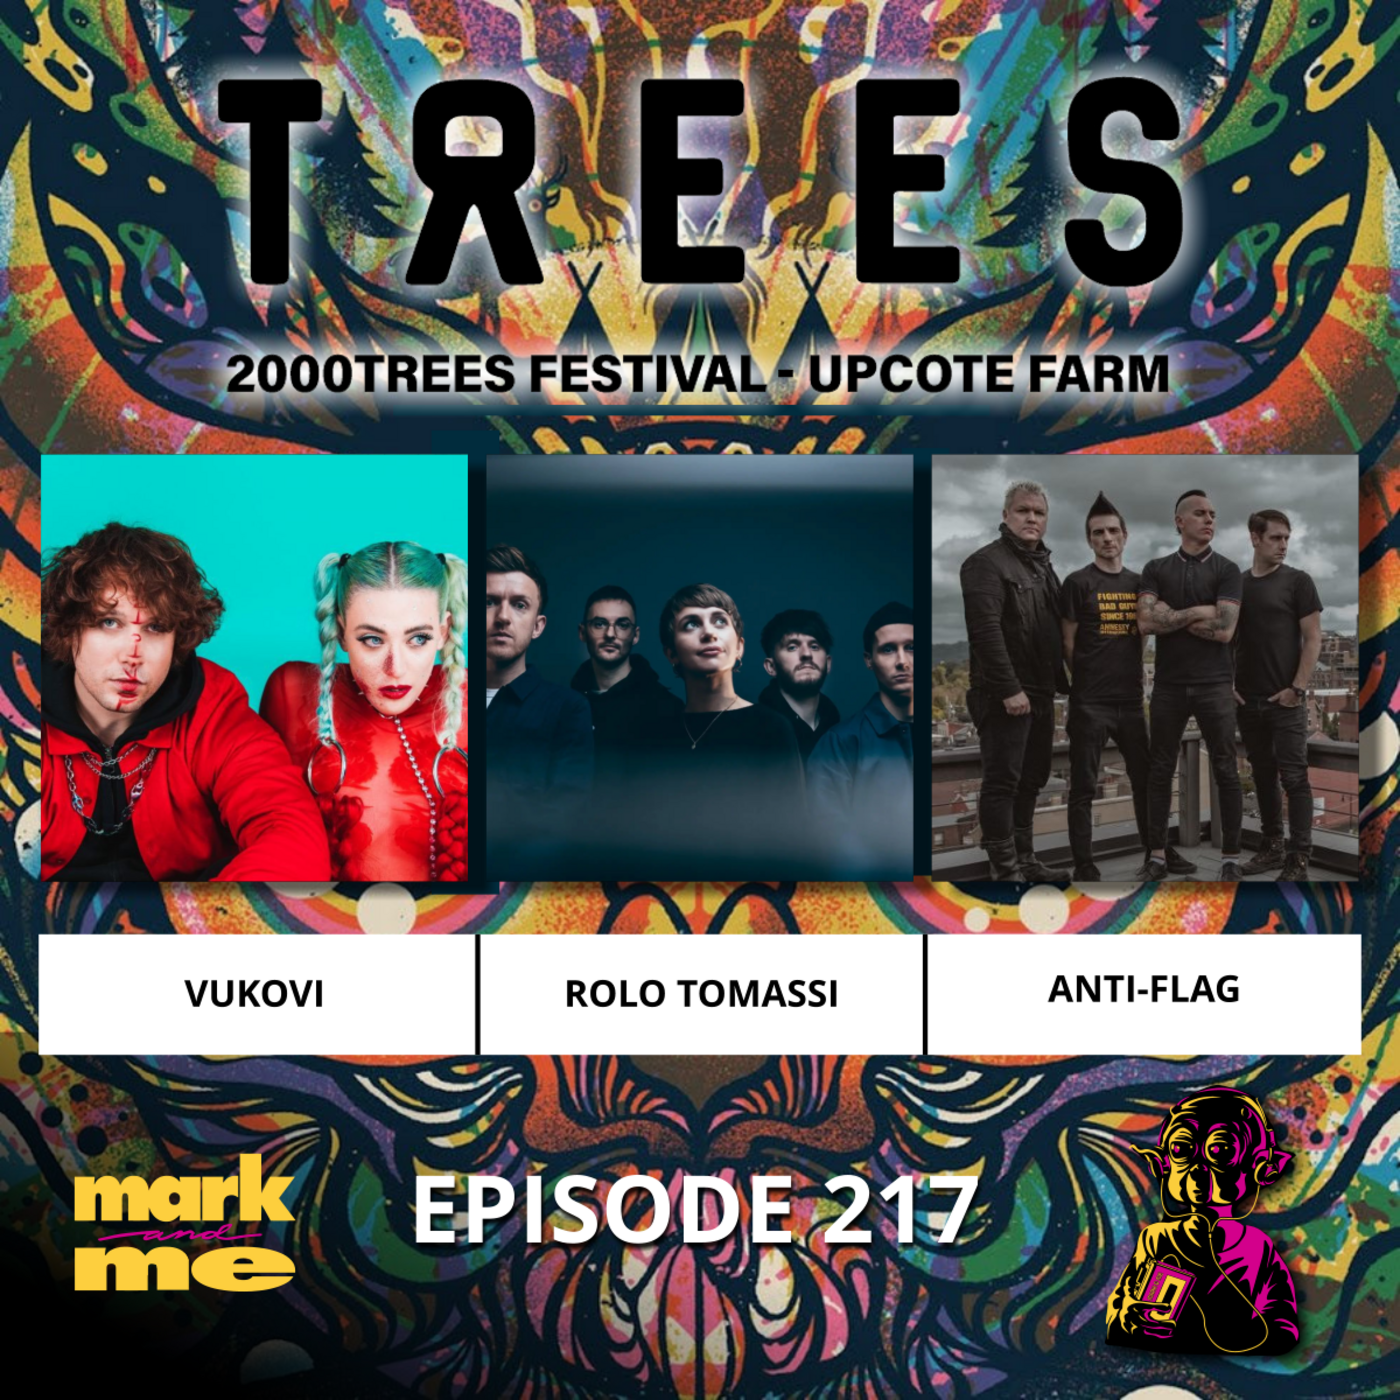 Episode 217: 2000trees Festival Special - VUKOVI, Rolo Tomassi & Anti-Flag